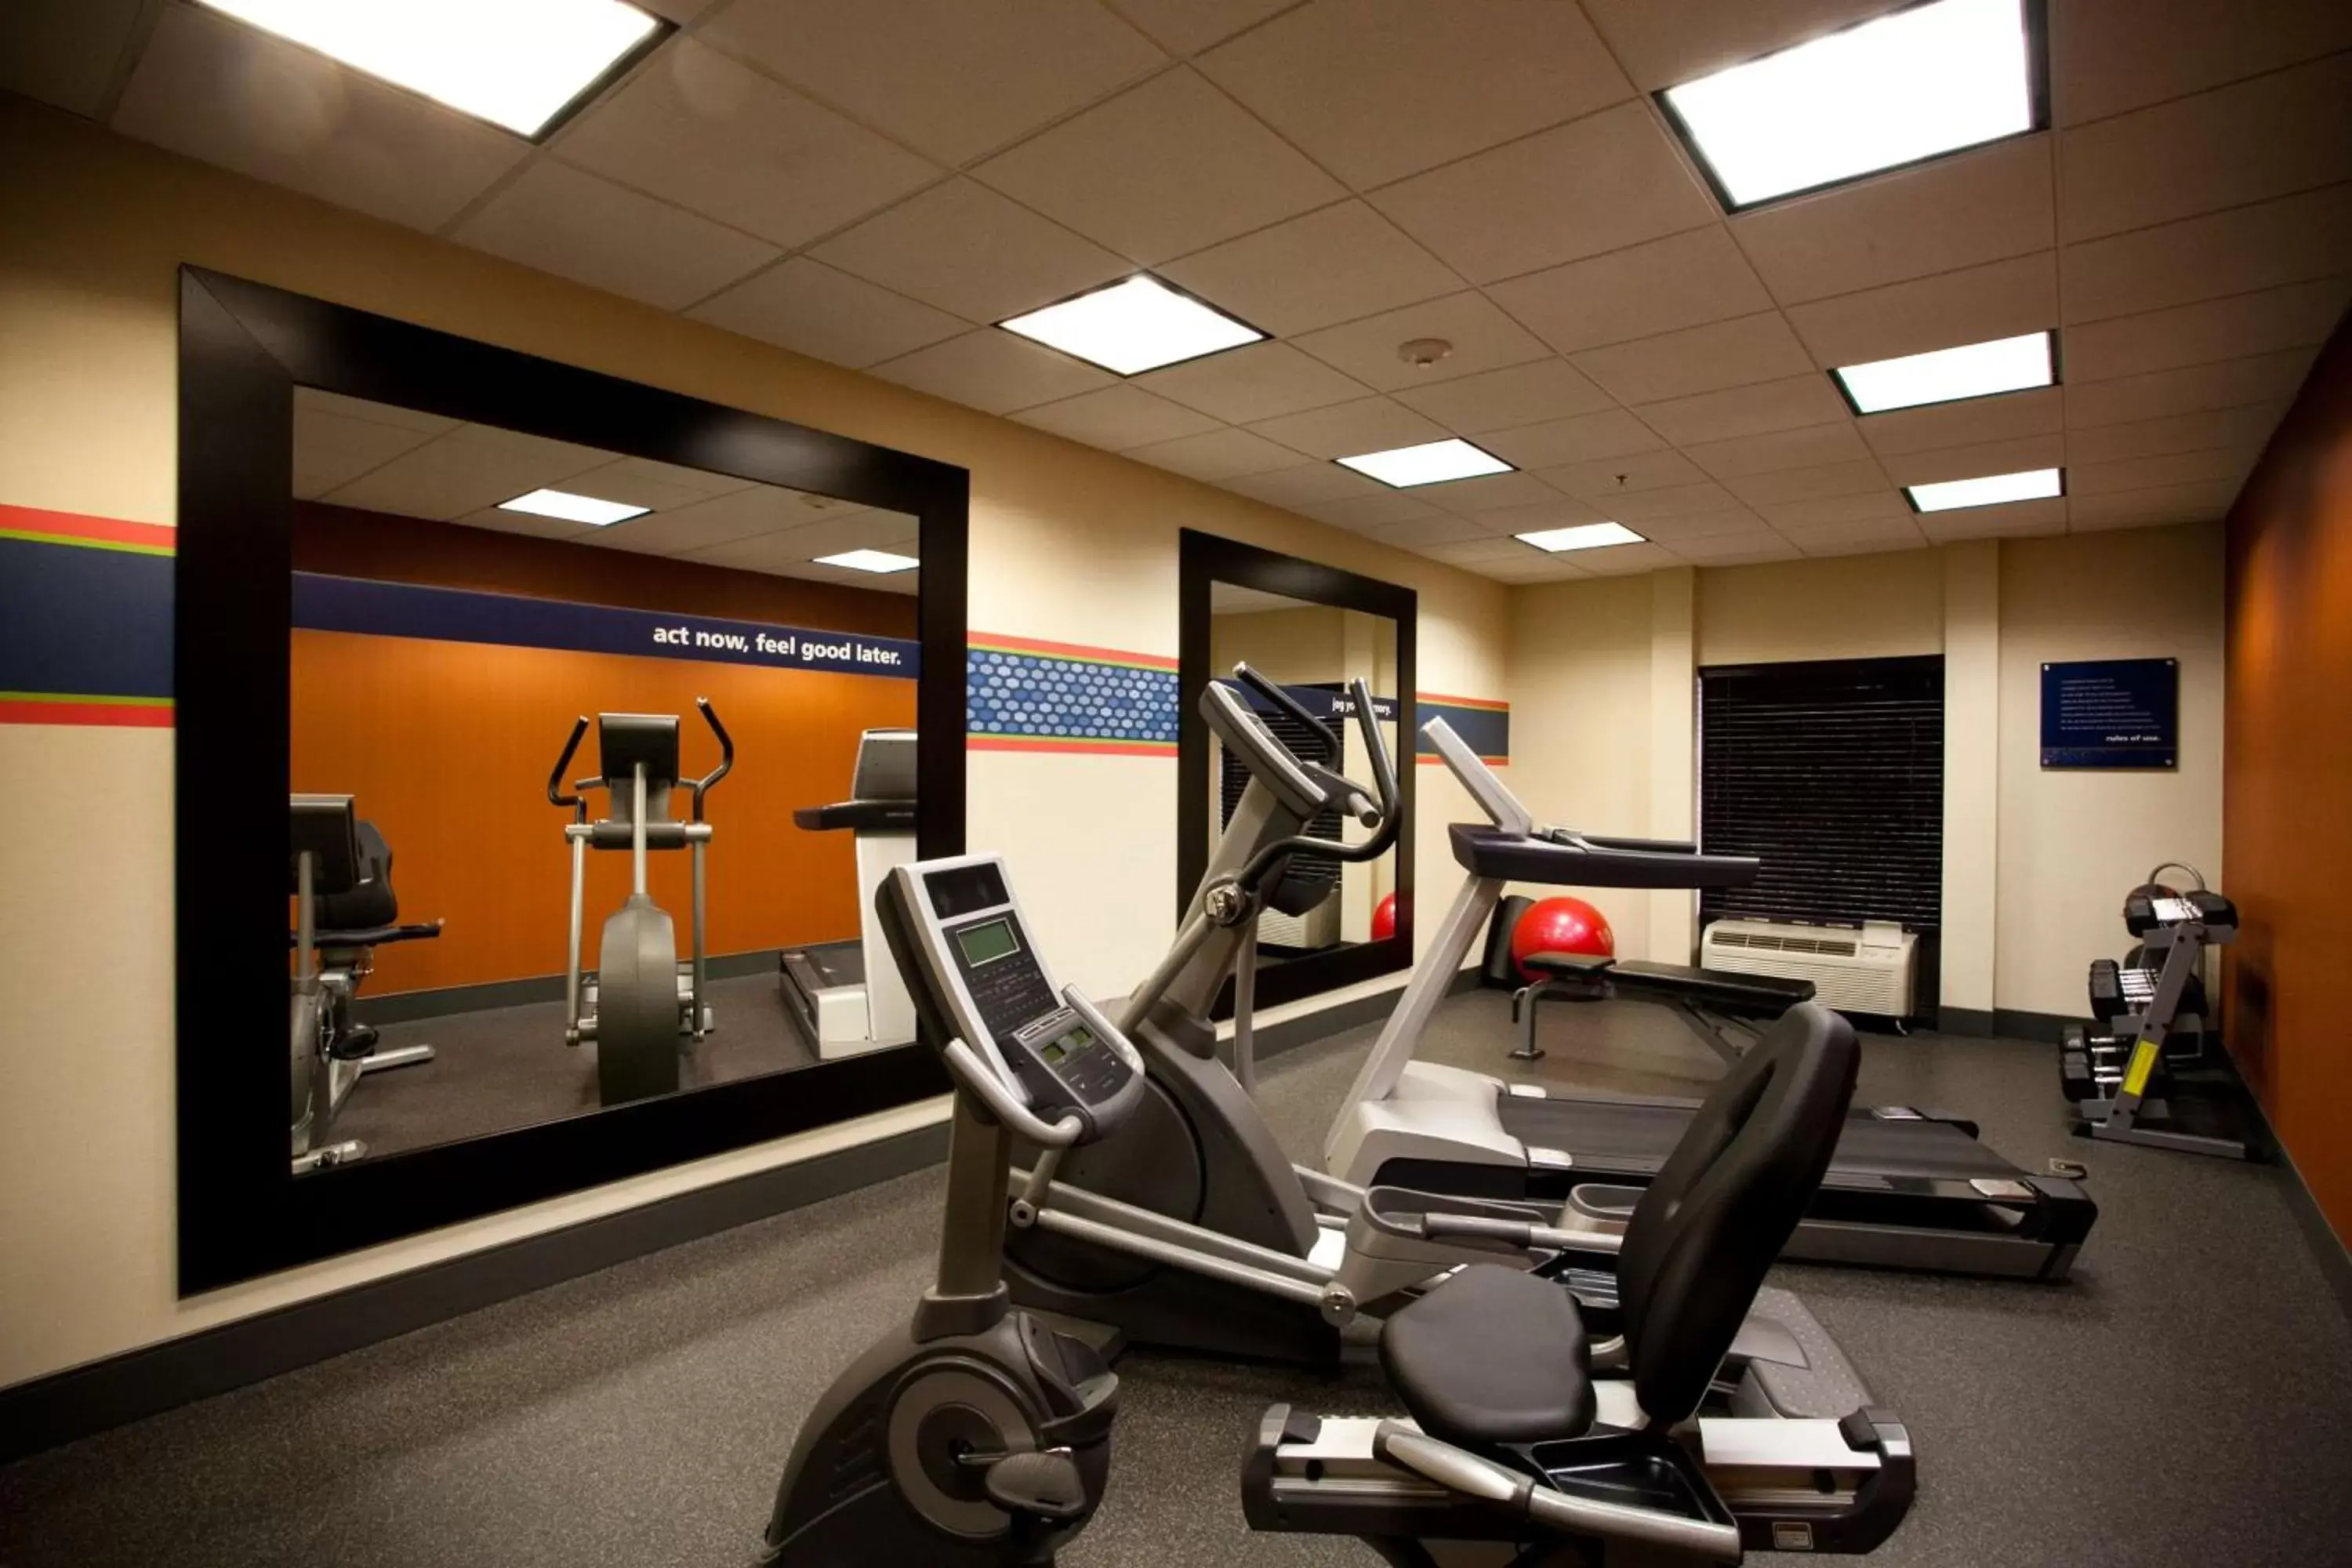 Fitness centre/facilities, Fitness Center/Facilities in Hampton Inn By Hilton Carrollton, Ga